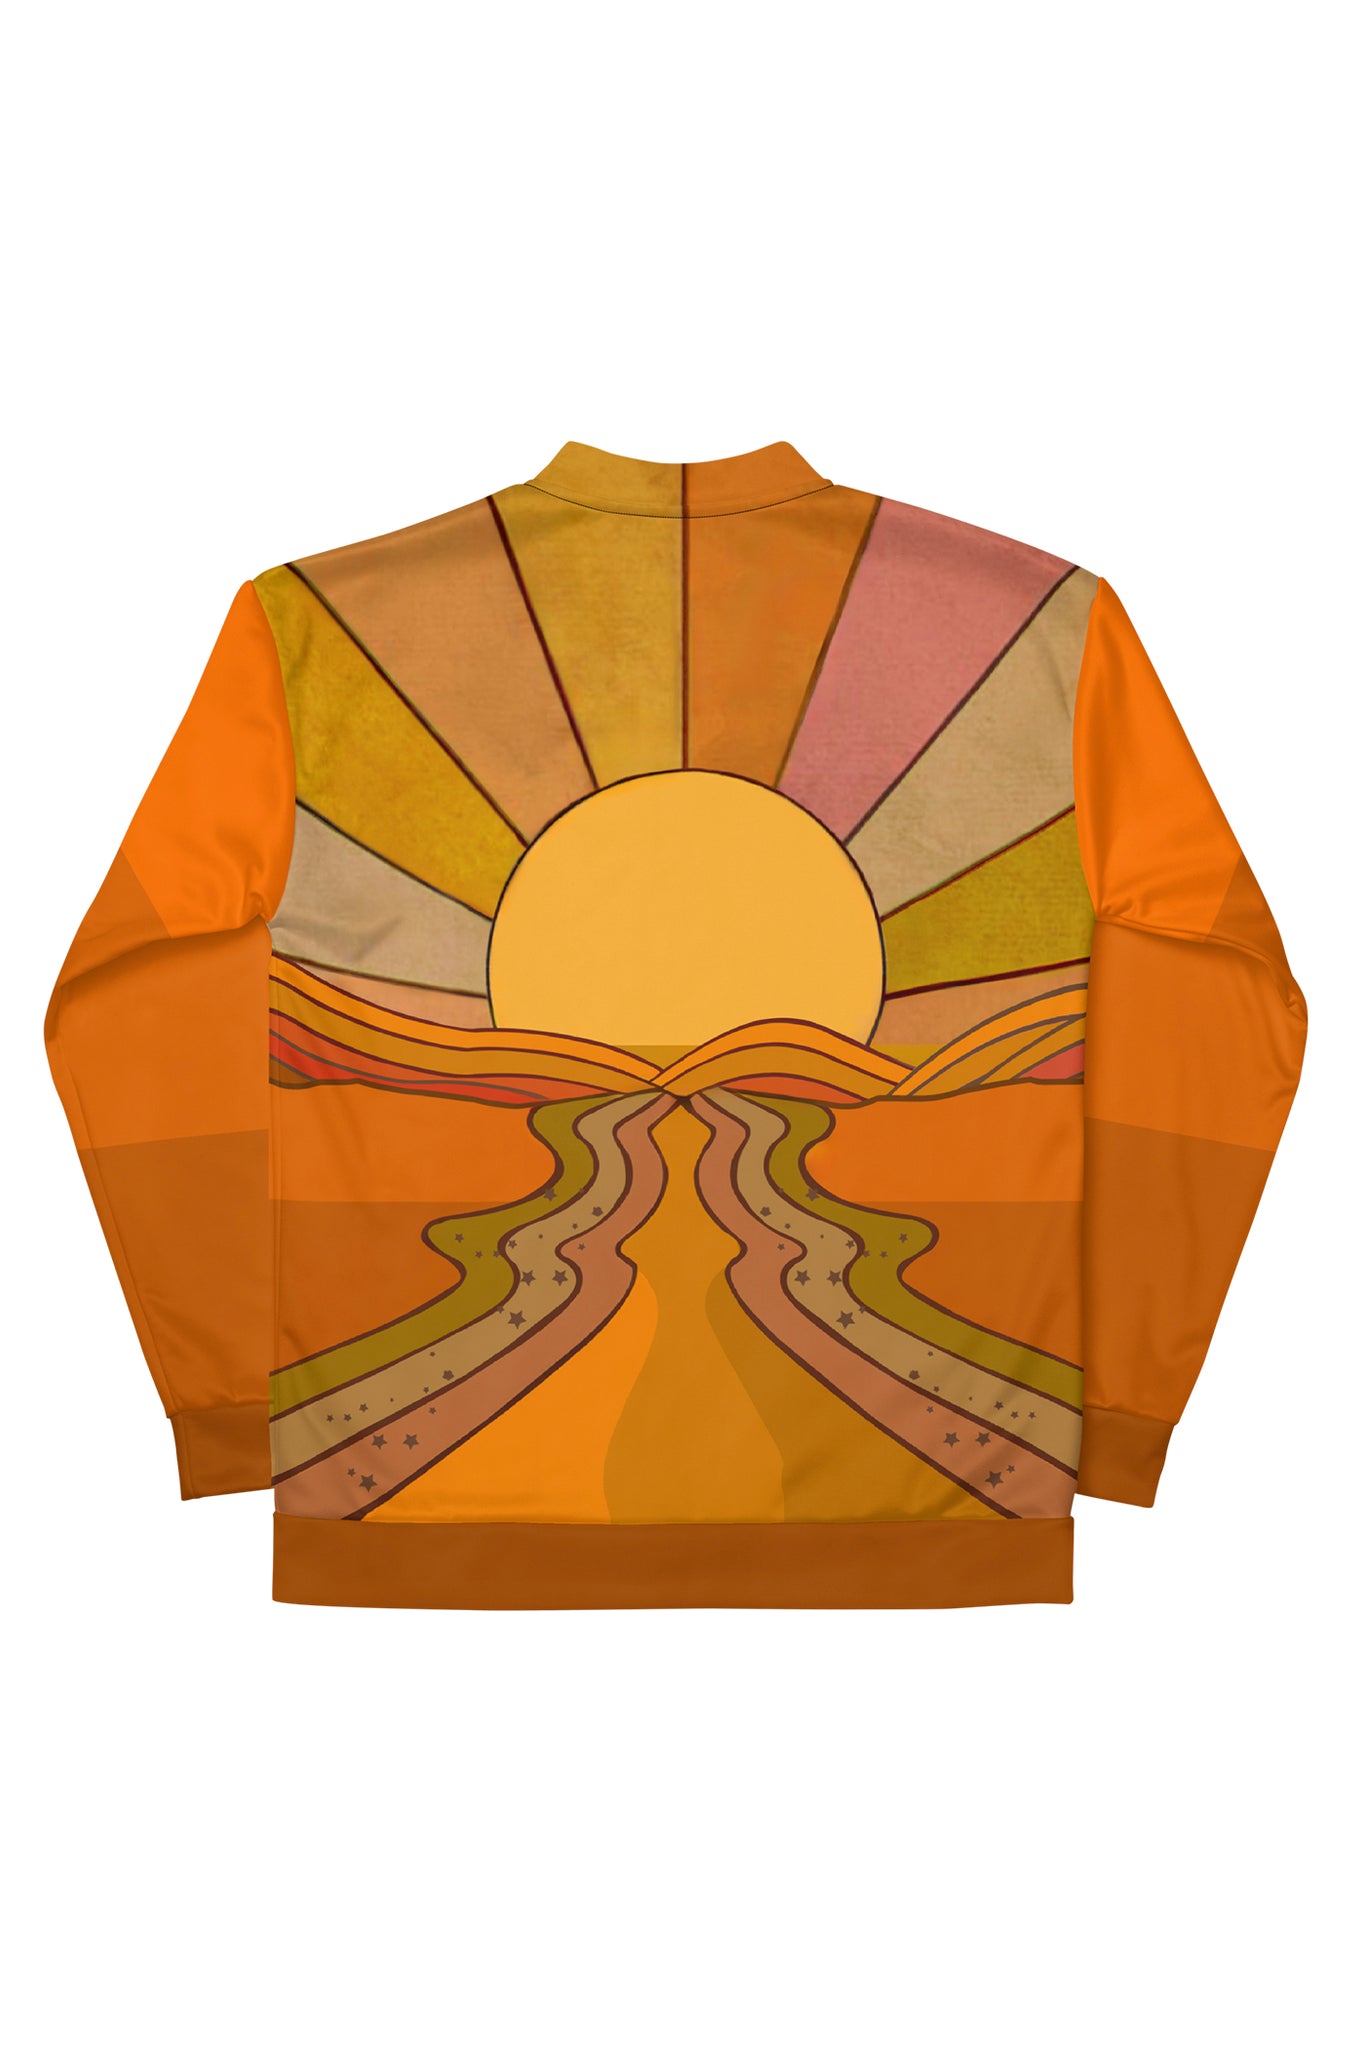 Good Day Sunshine ☀︎ Track Star jacket